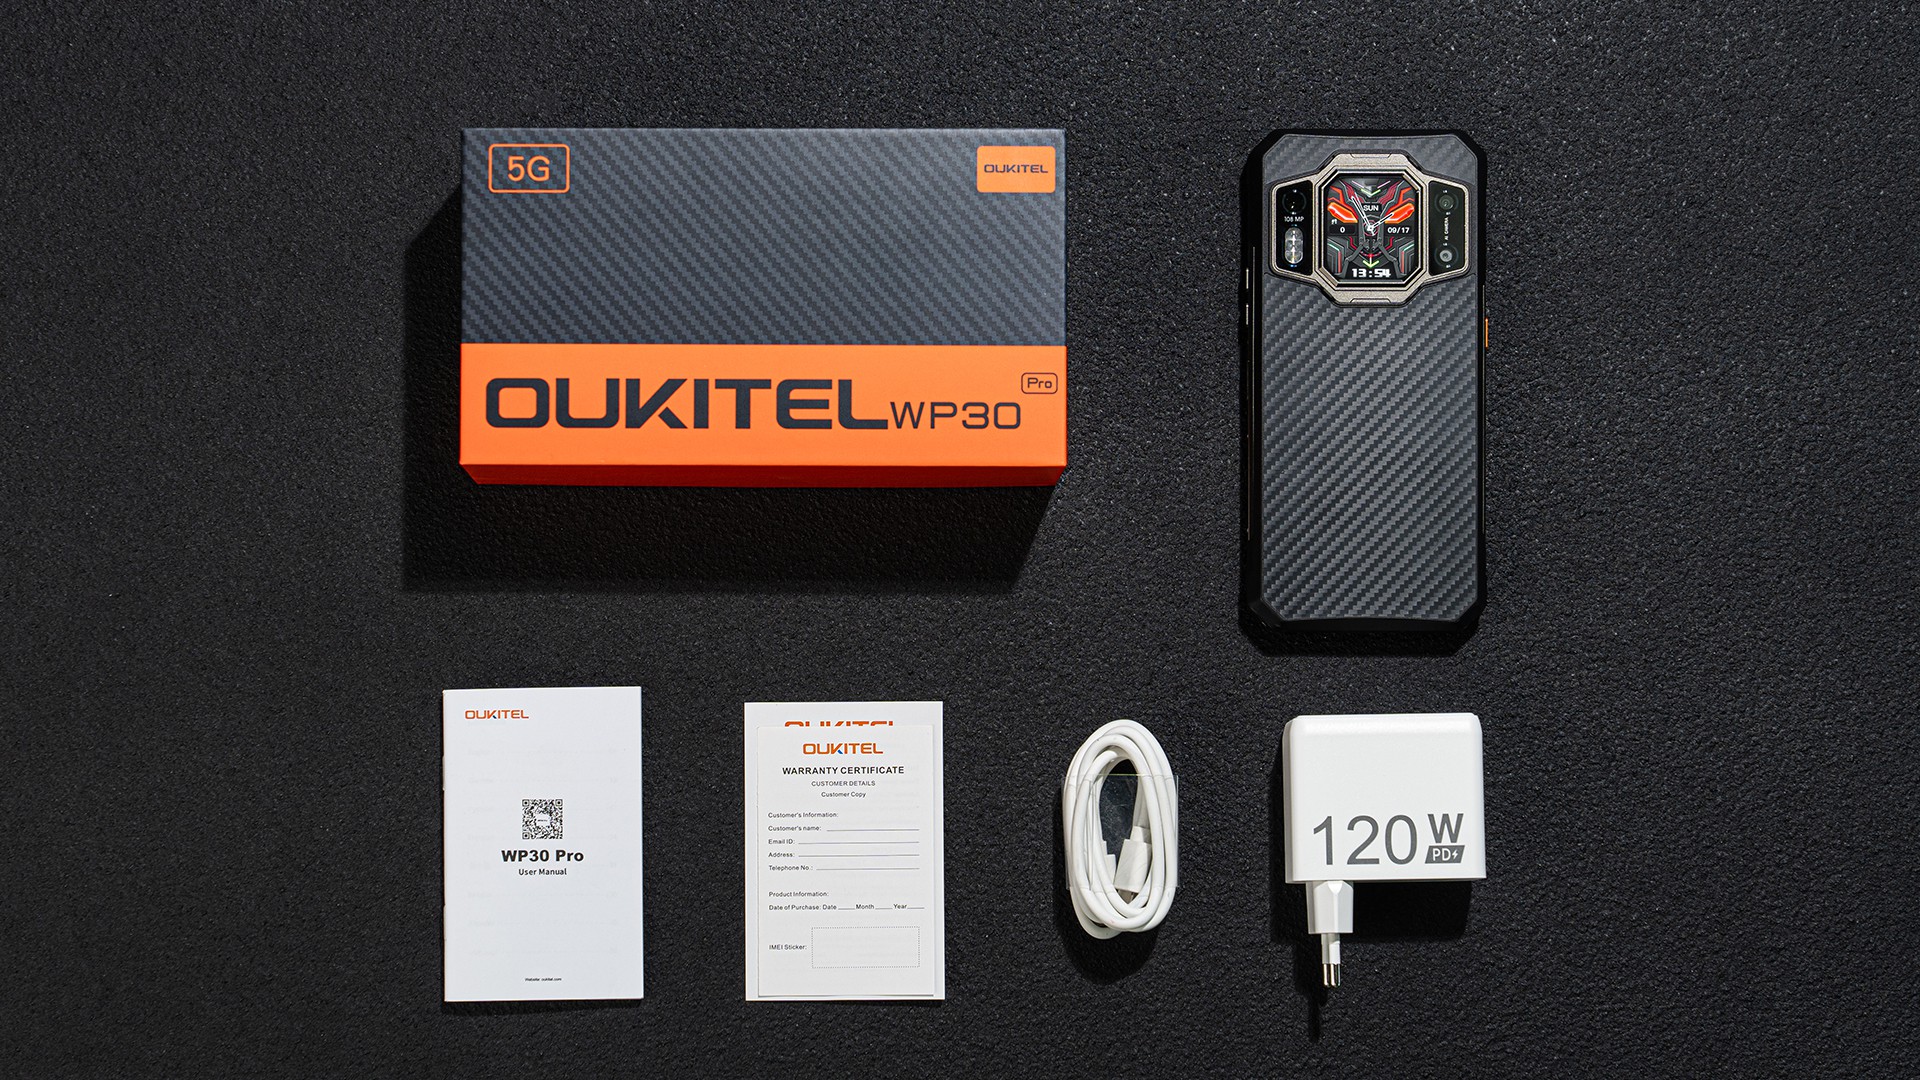 Oukitel WP30 Pro goes live on AliExpress